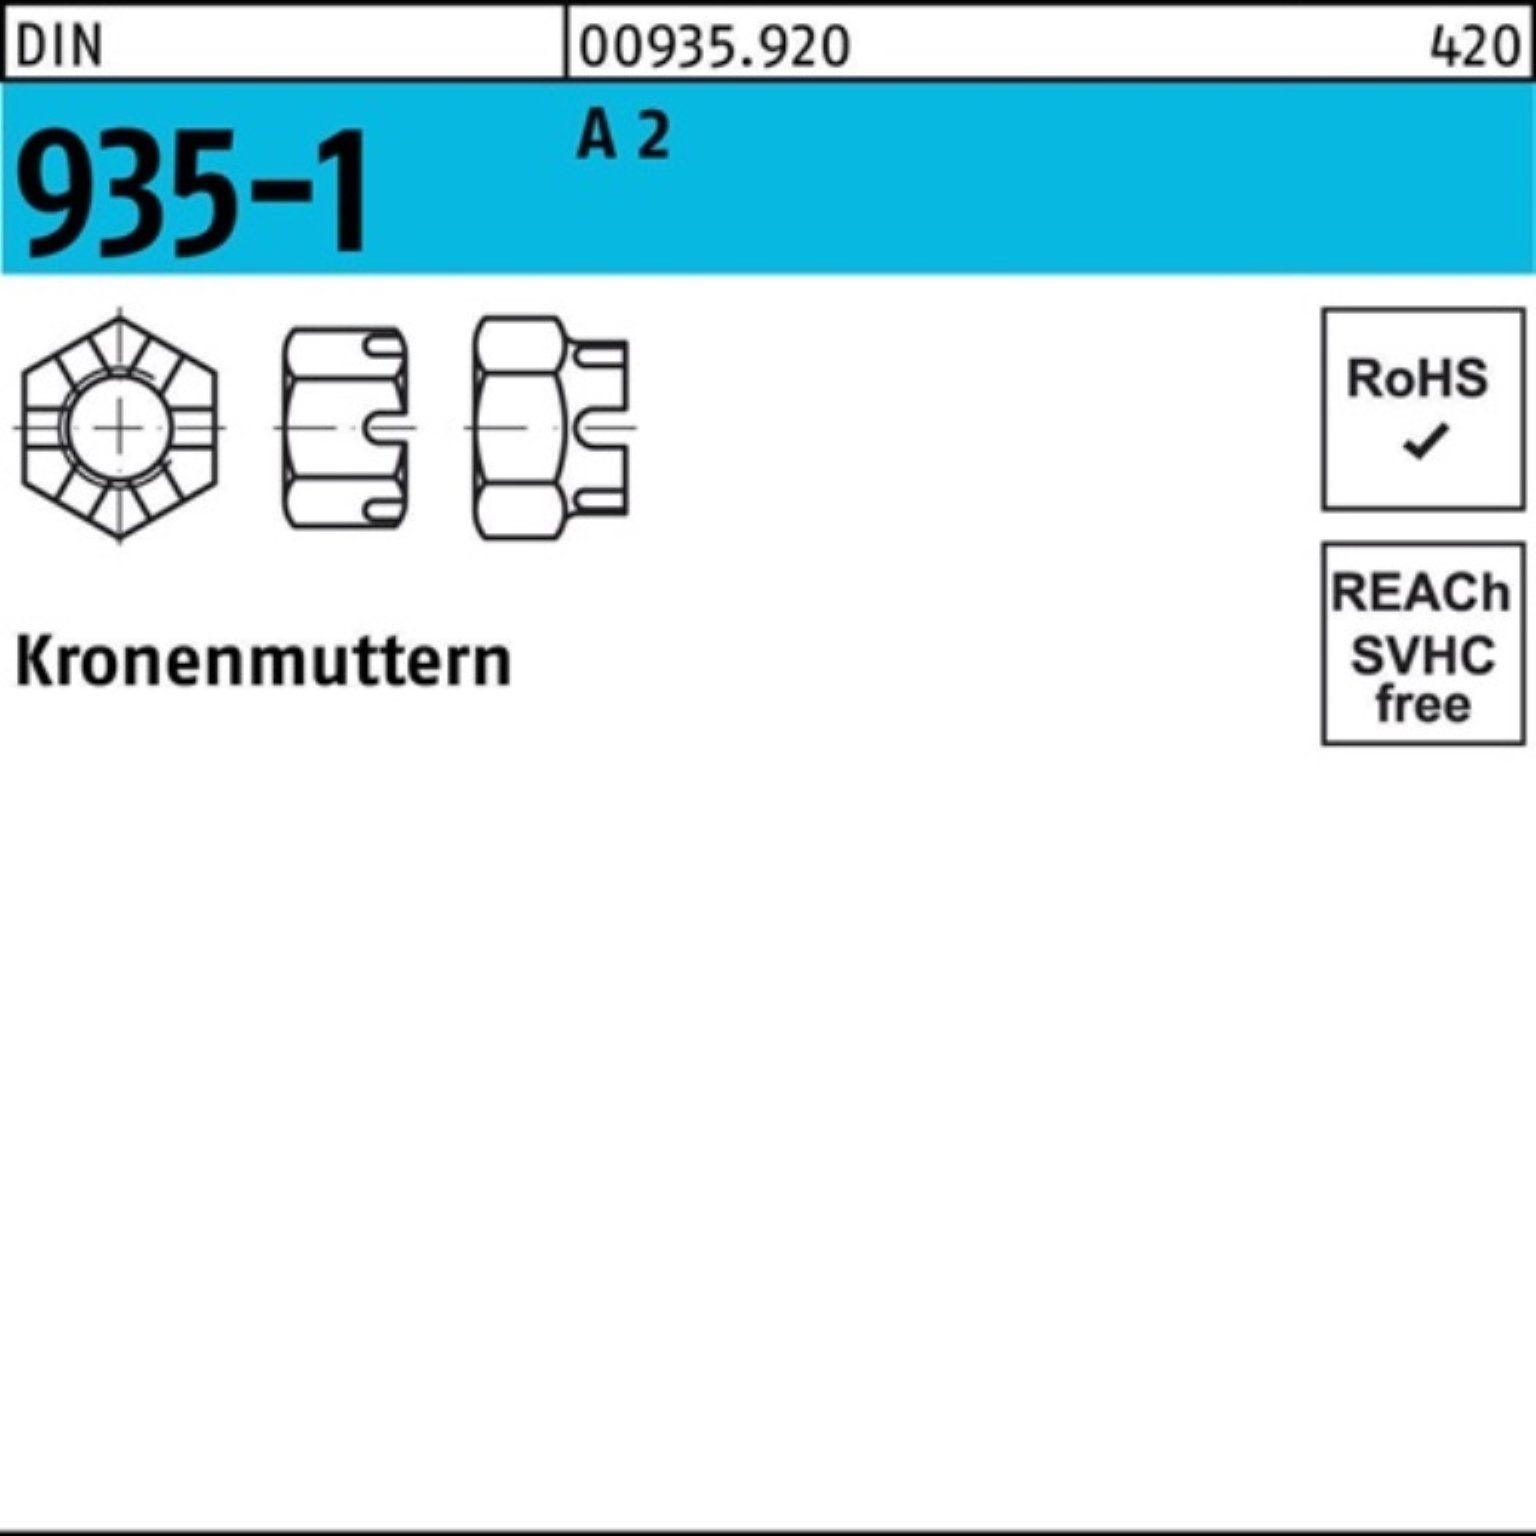 Reyher Kronenmutter 100er M8 Krone DIN 25 Pack A Stück A DIN Kronenmutter 935-1 935-1 2 2